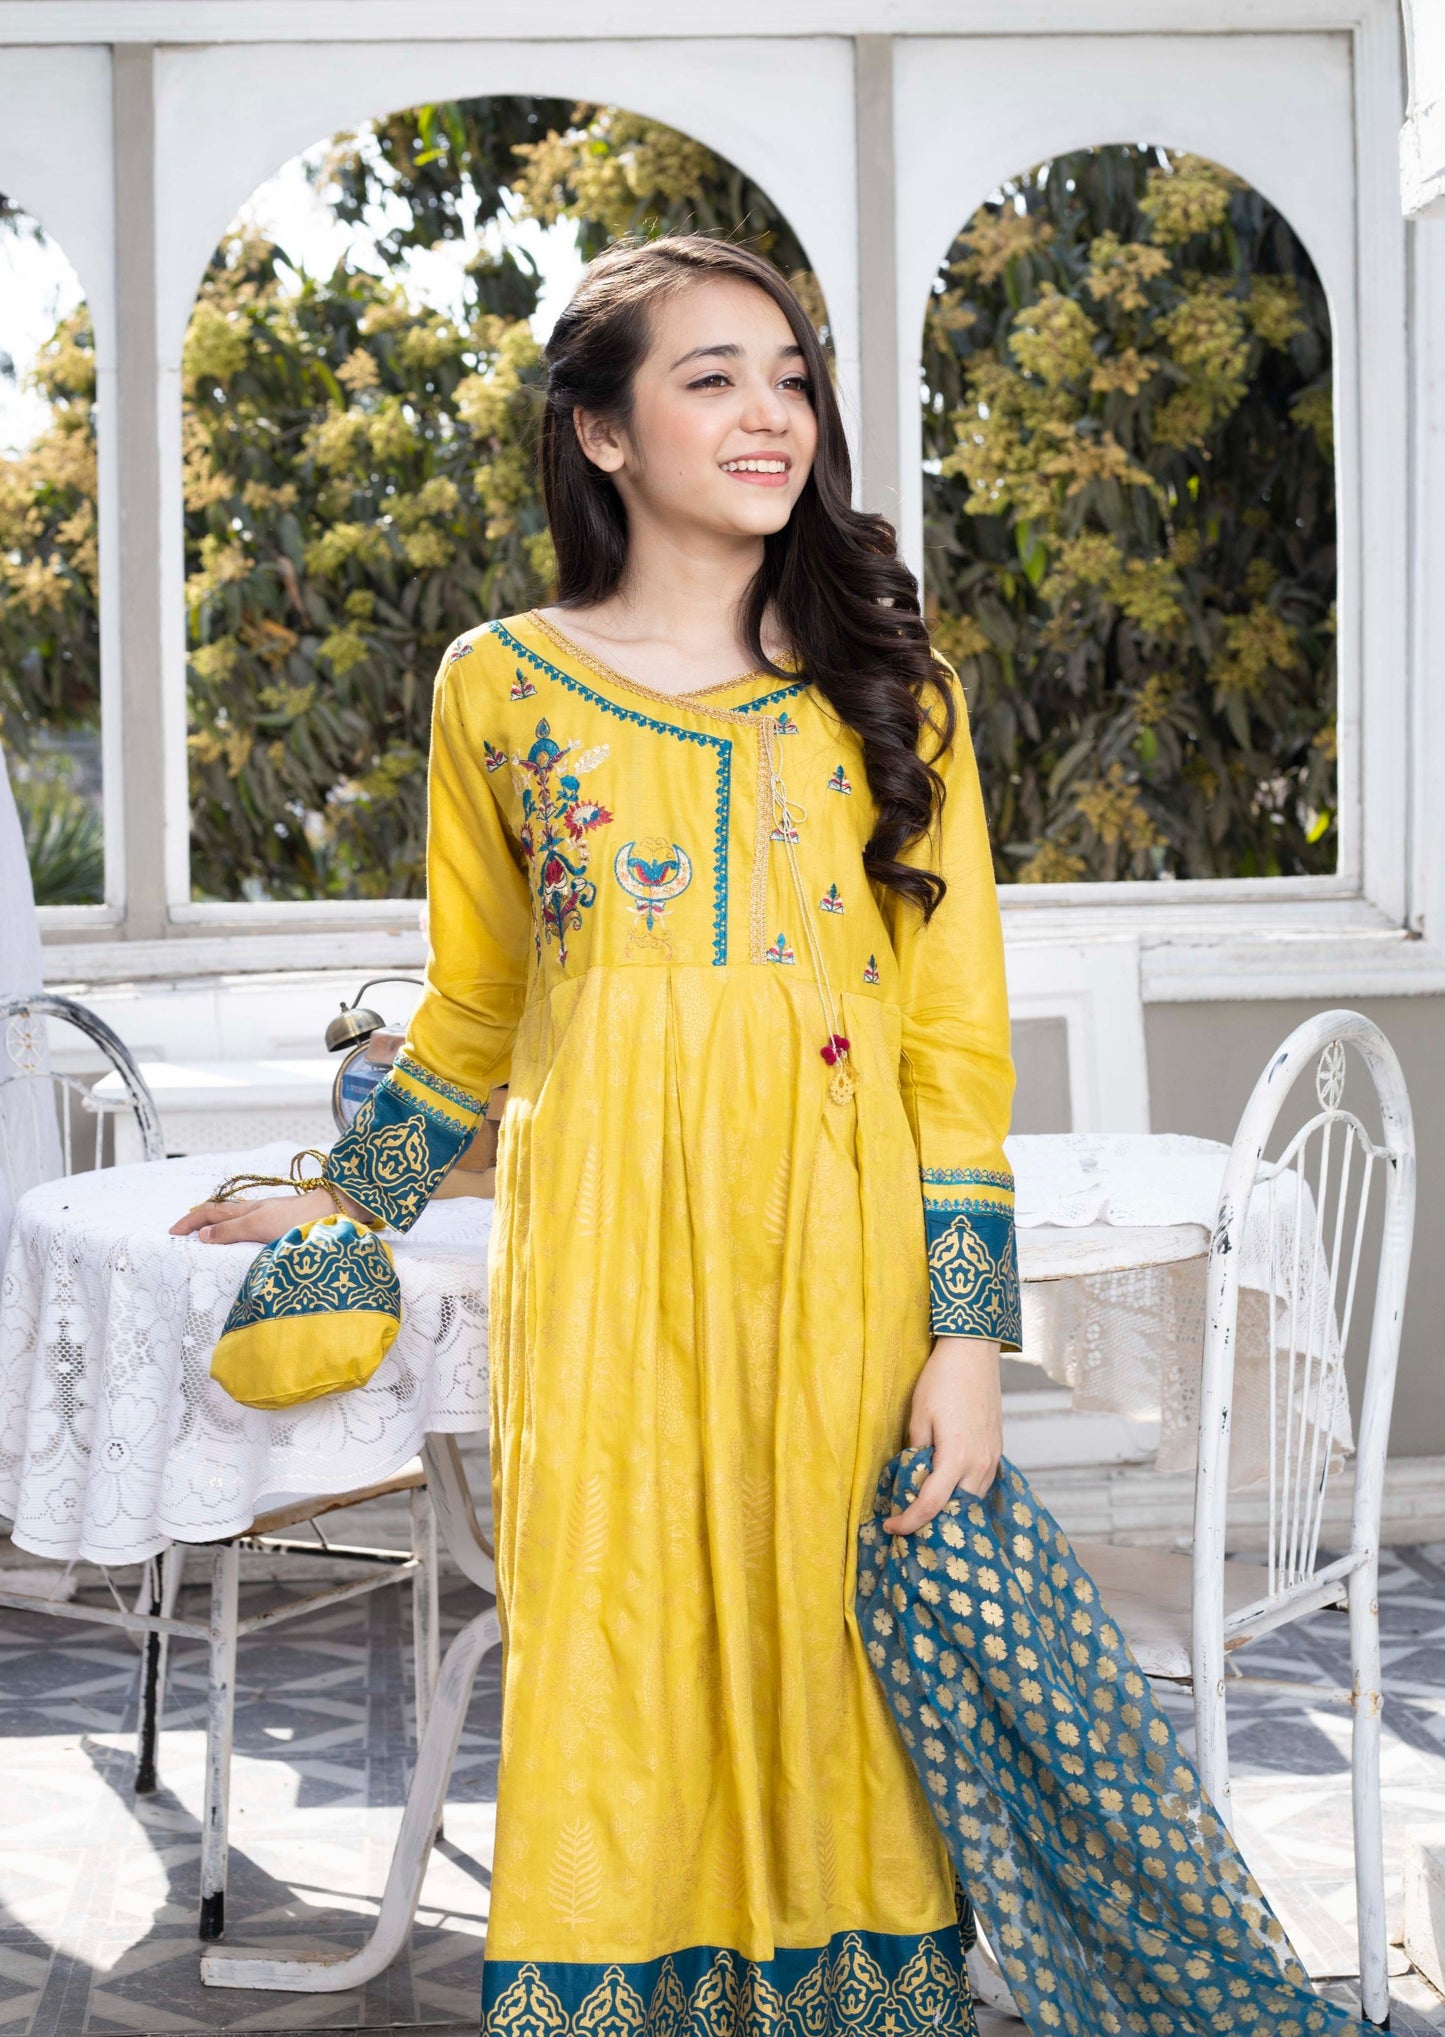 Lemon Yellow - Girl's Dress